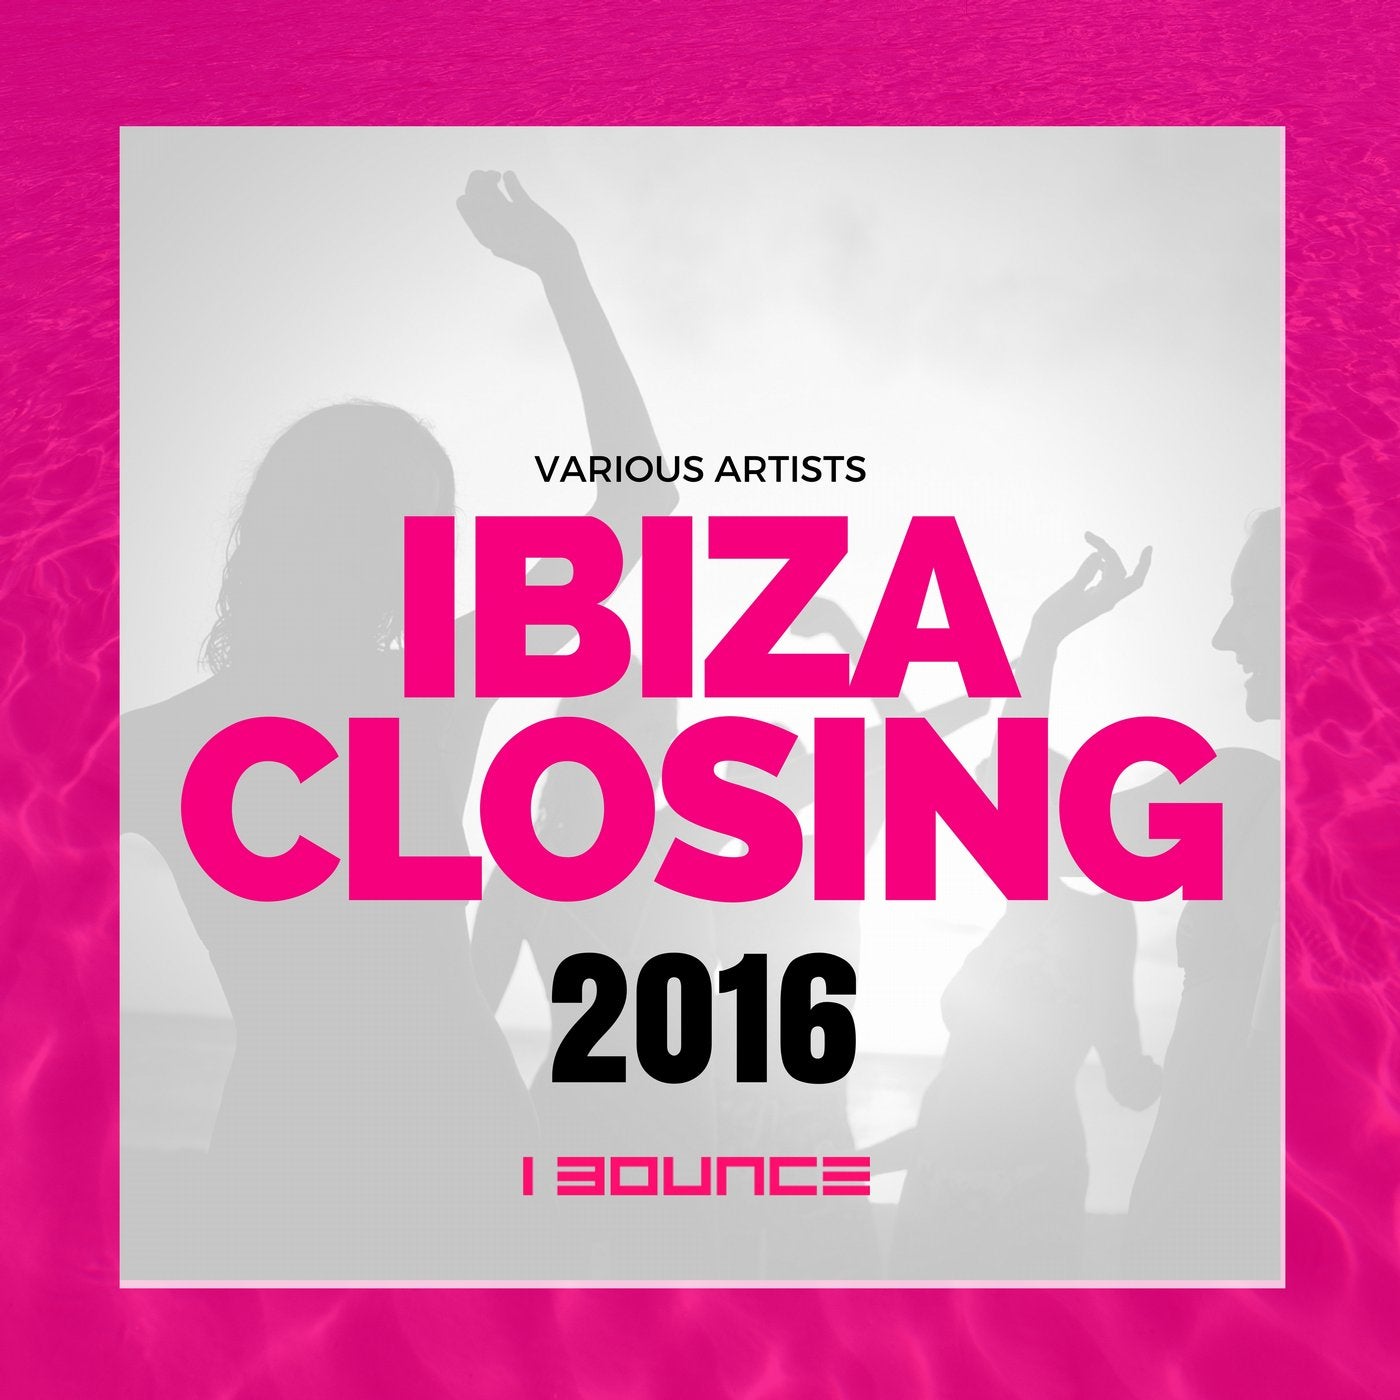 Ibiza Closing 2016